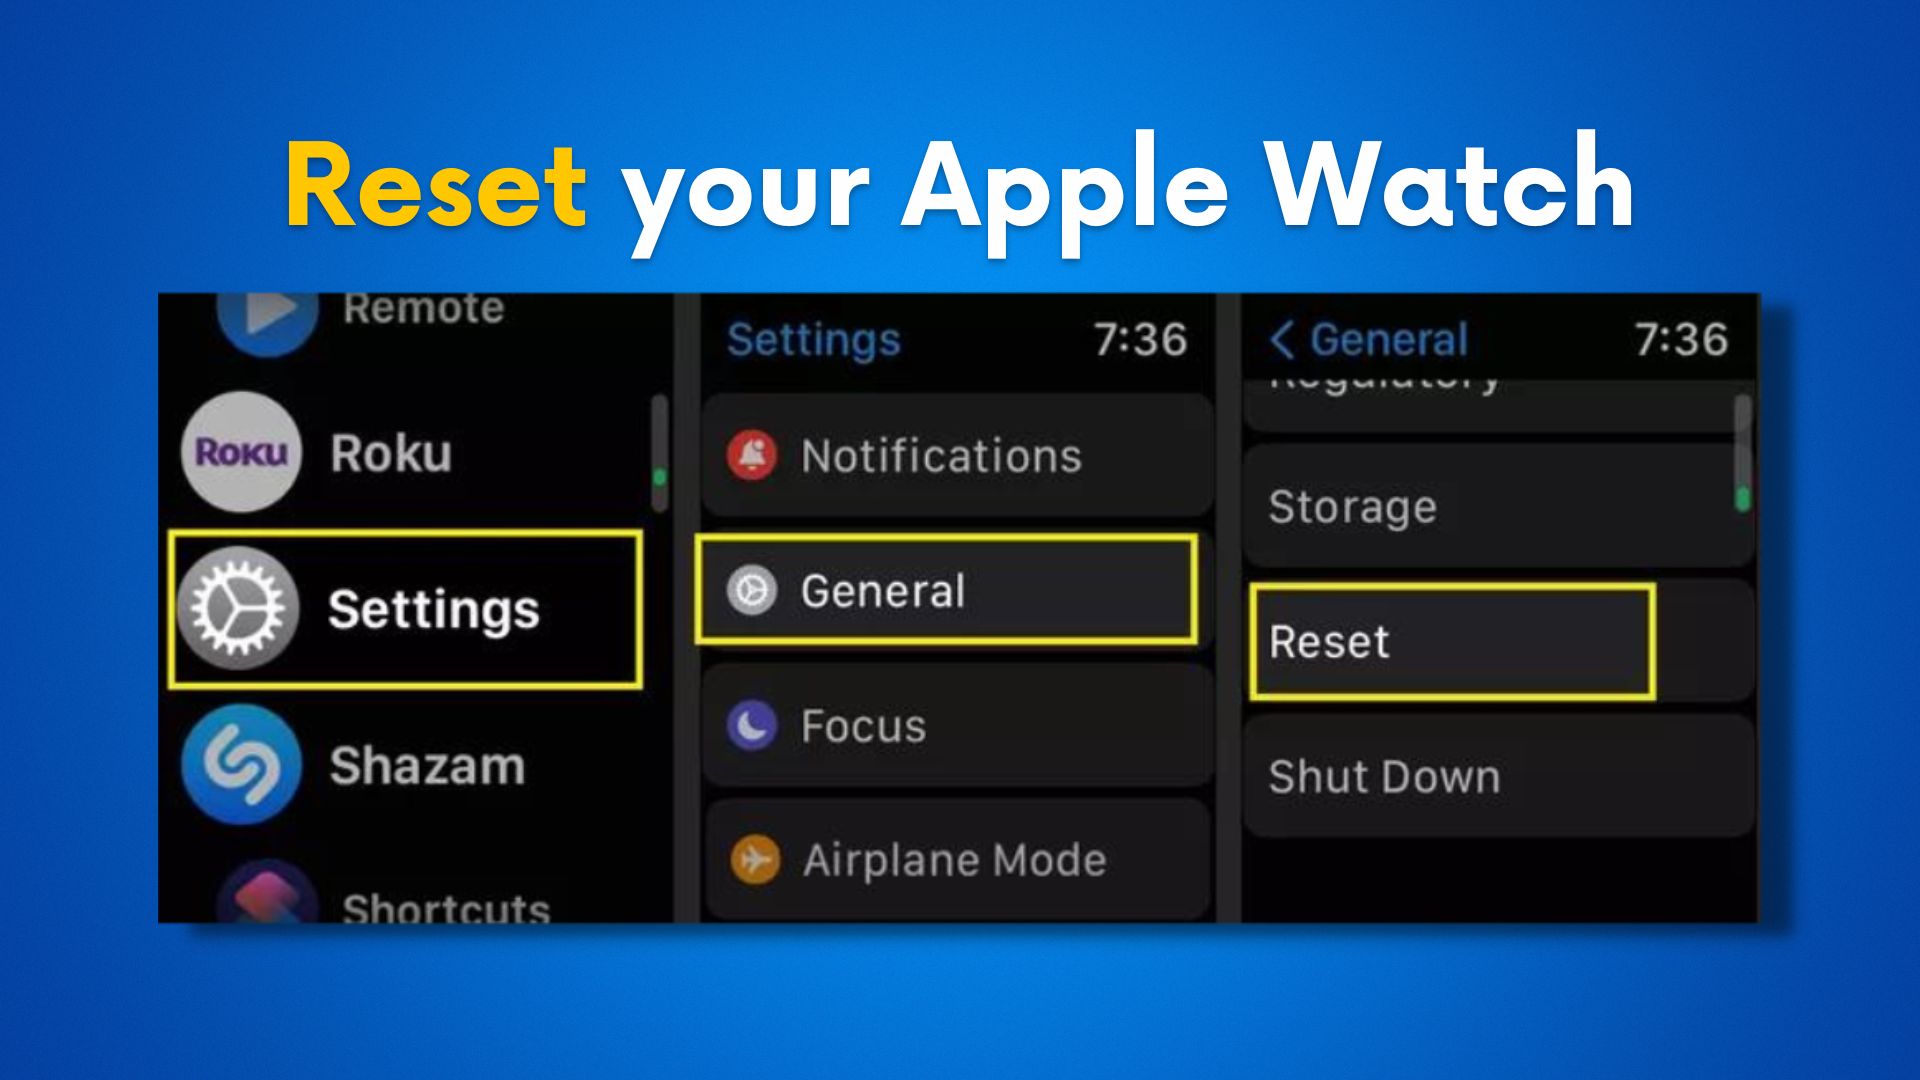 Reset your Apple Watch